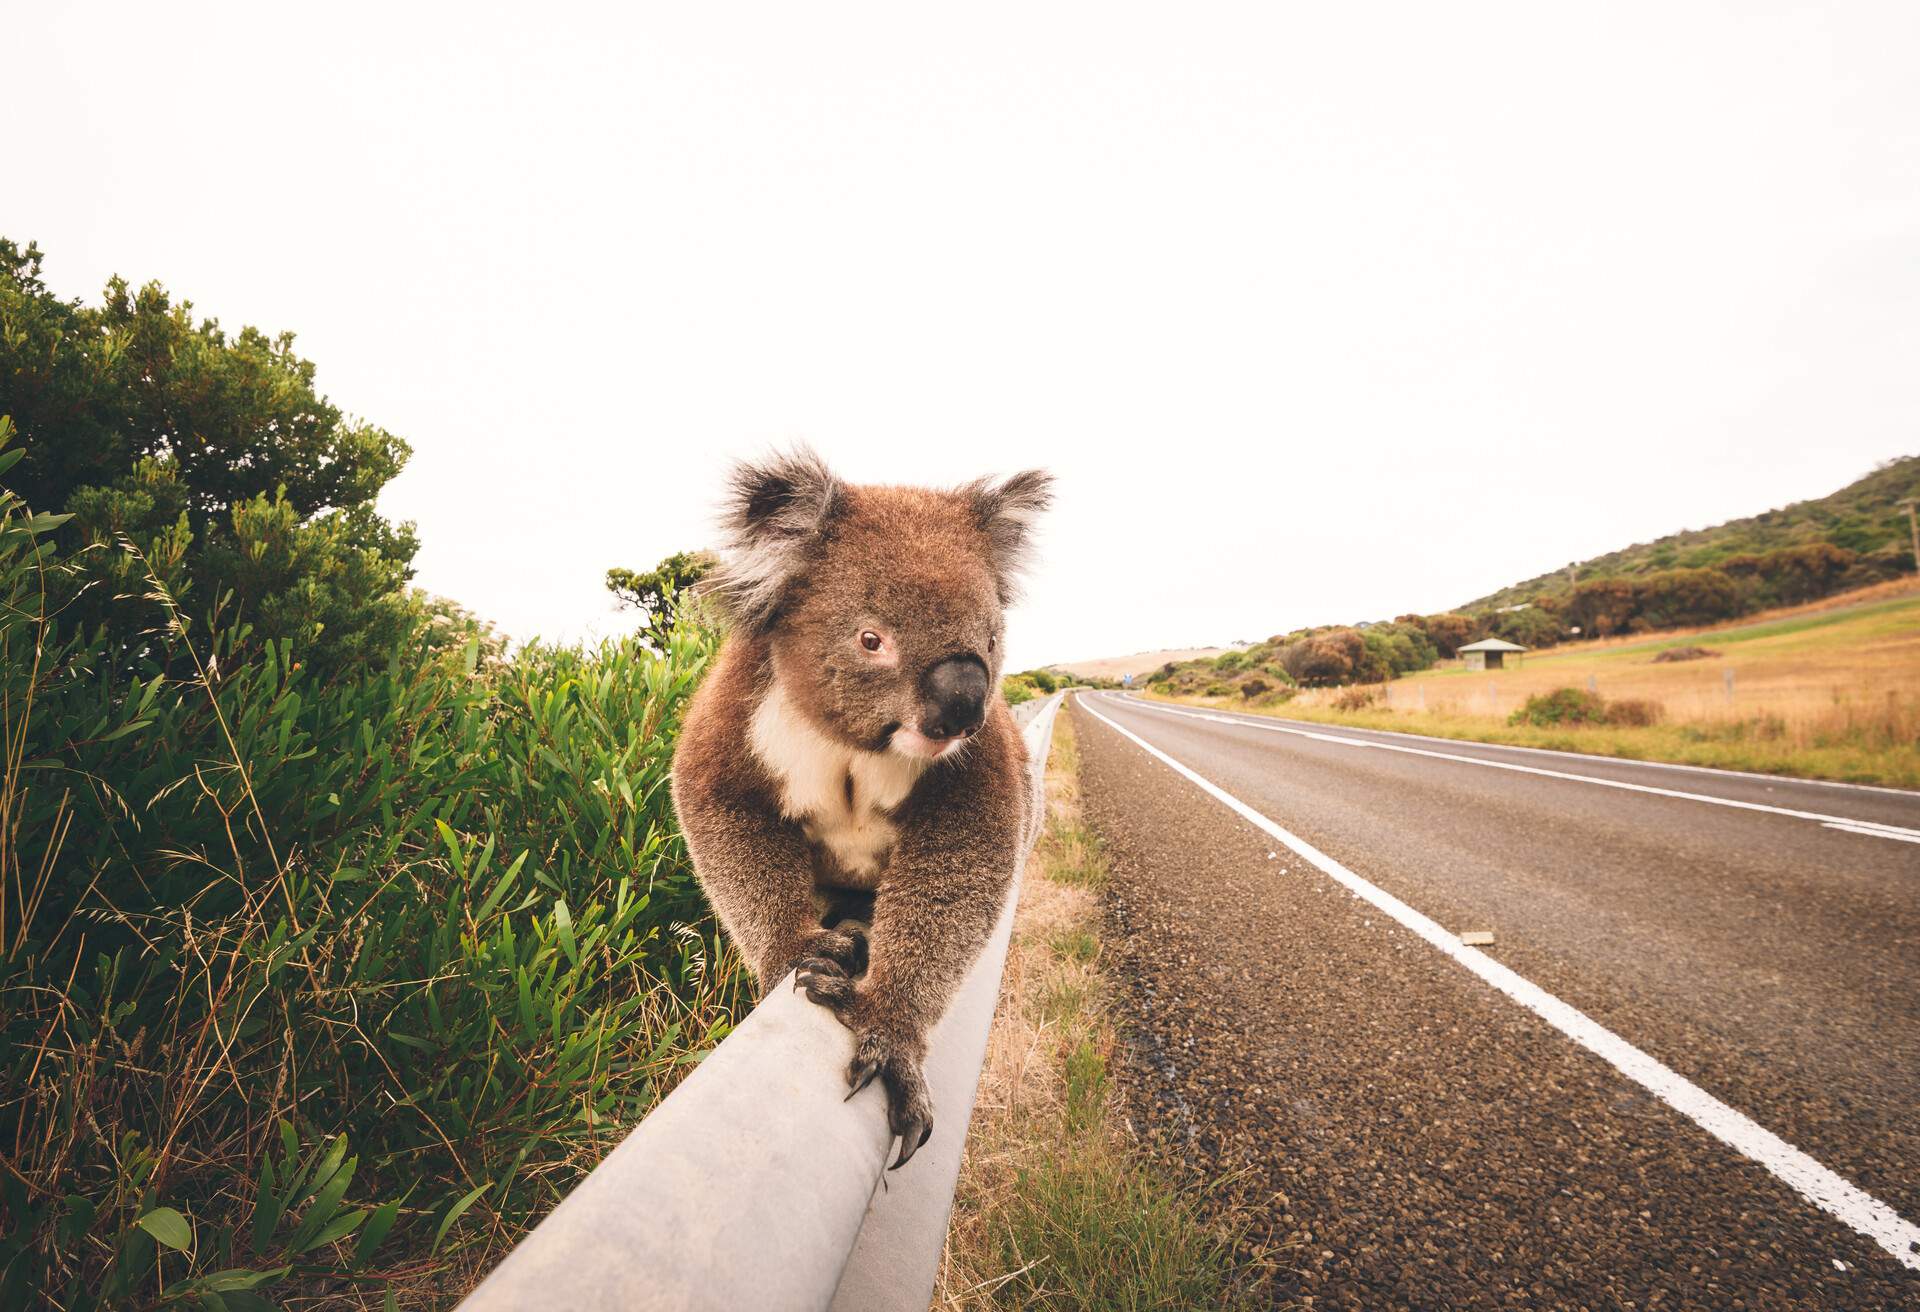 Koala on the road in Victoria, Australia.